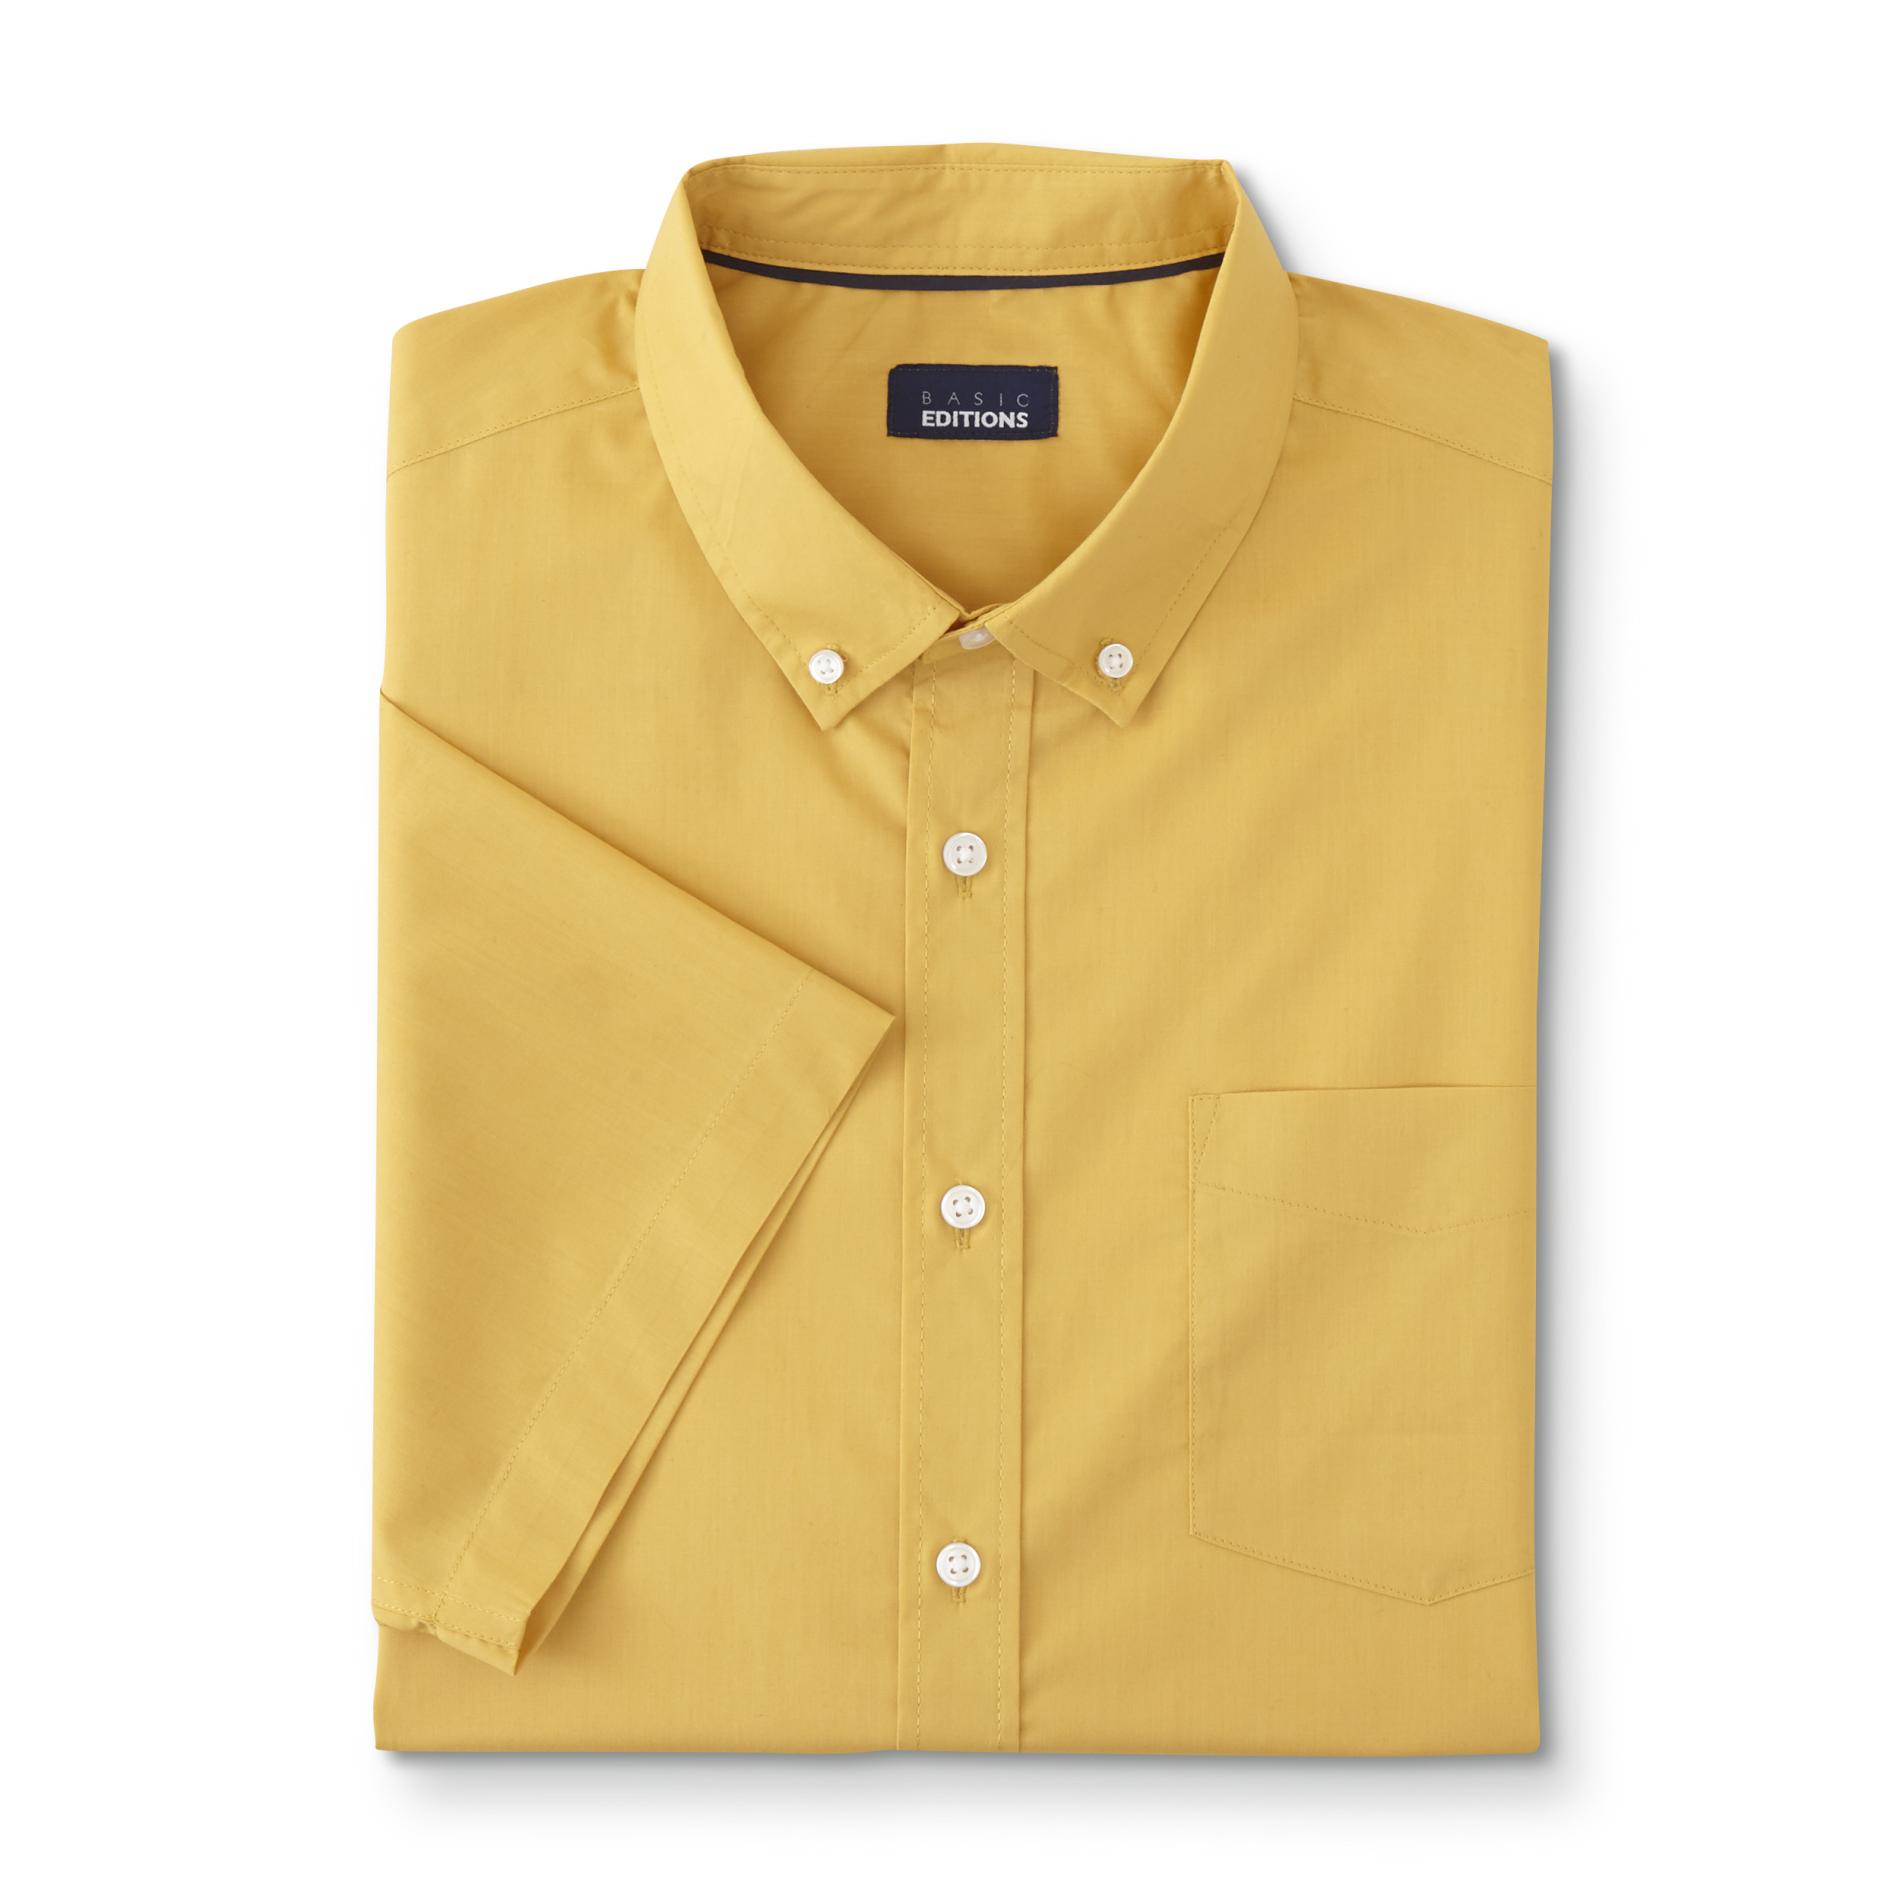 Basic Editions Men's Big & Tall Short-Sleeve Easy-Care Dress Shirt